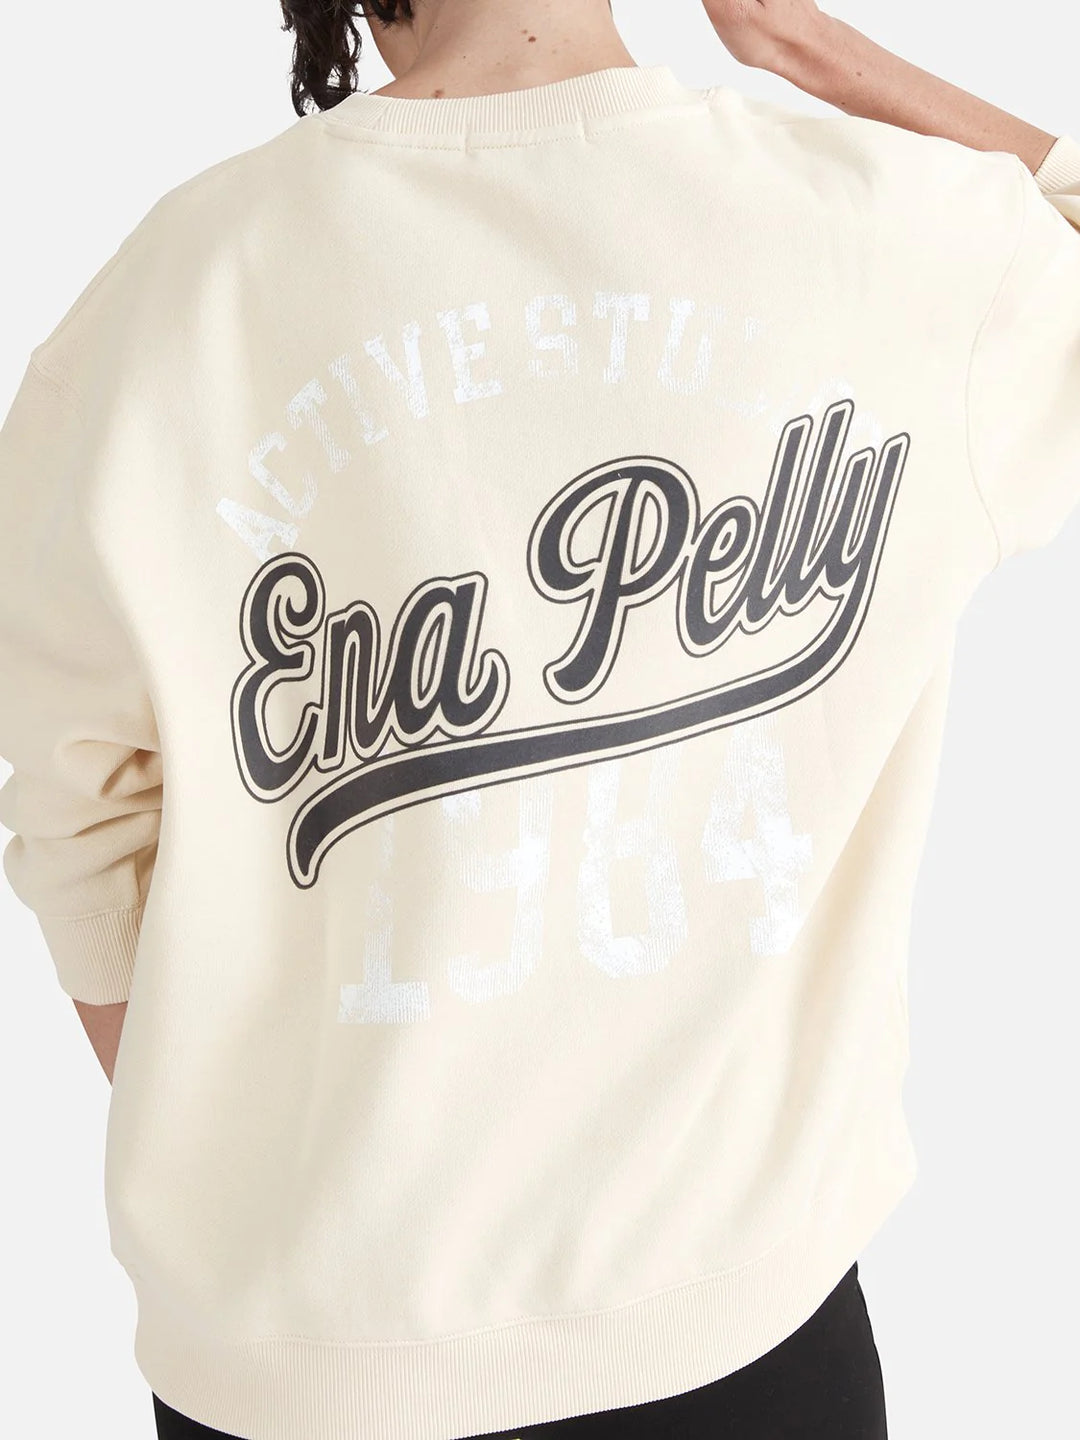 Ena Pelly EP Captain Oversized Sweater - French Vanilla